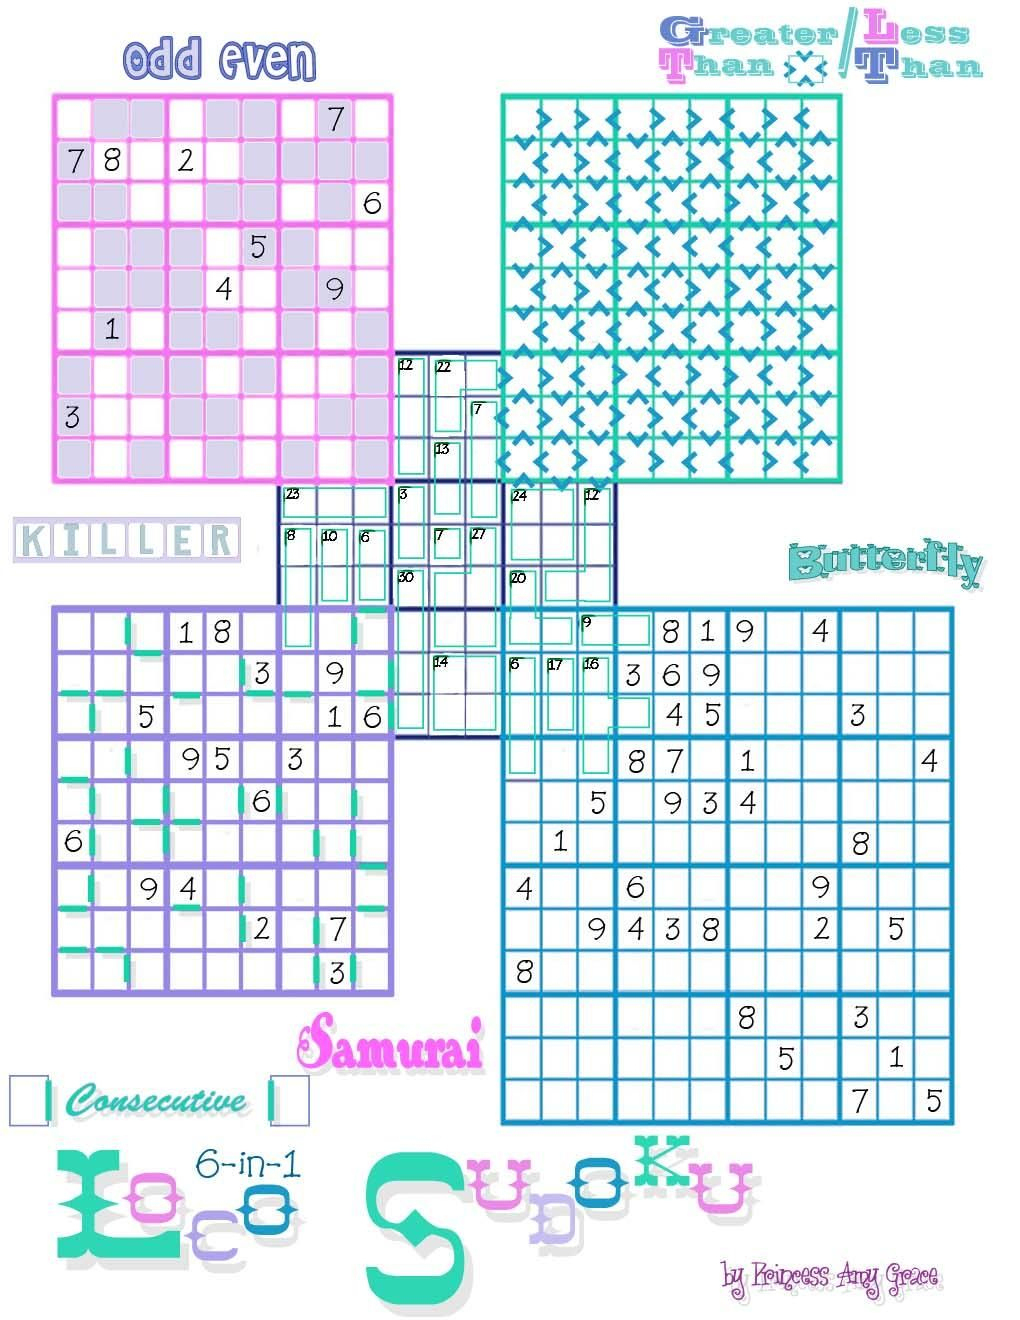 print-at-home-loco-sudoku-kappa-puzzles-printable-loco-sudoku-sudoku